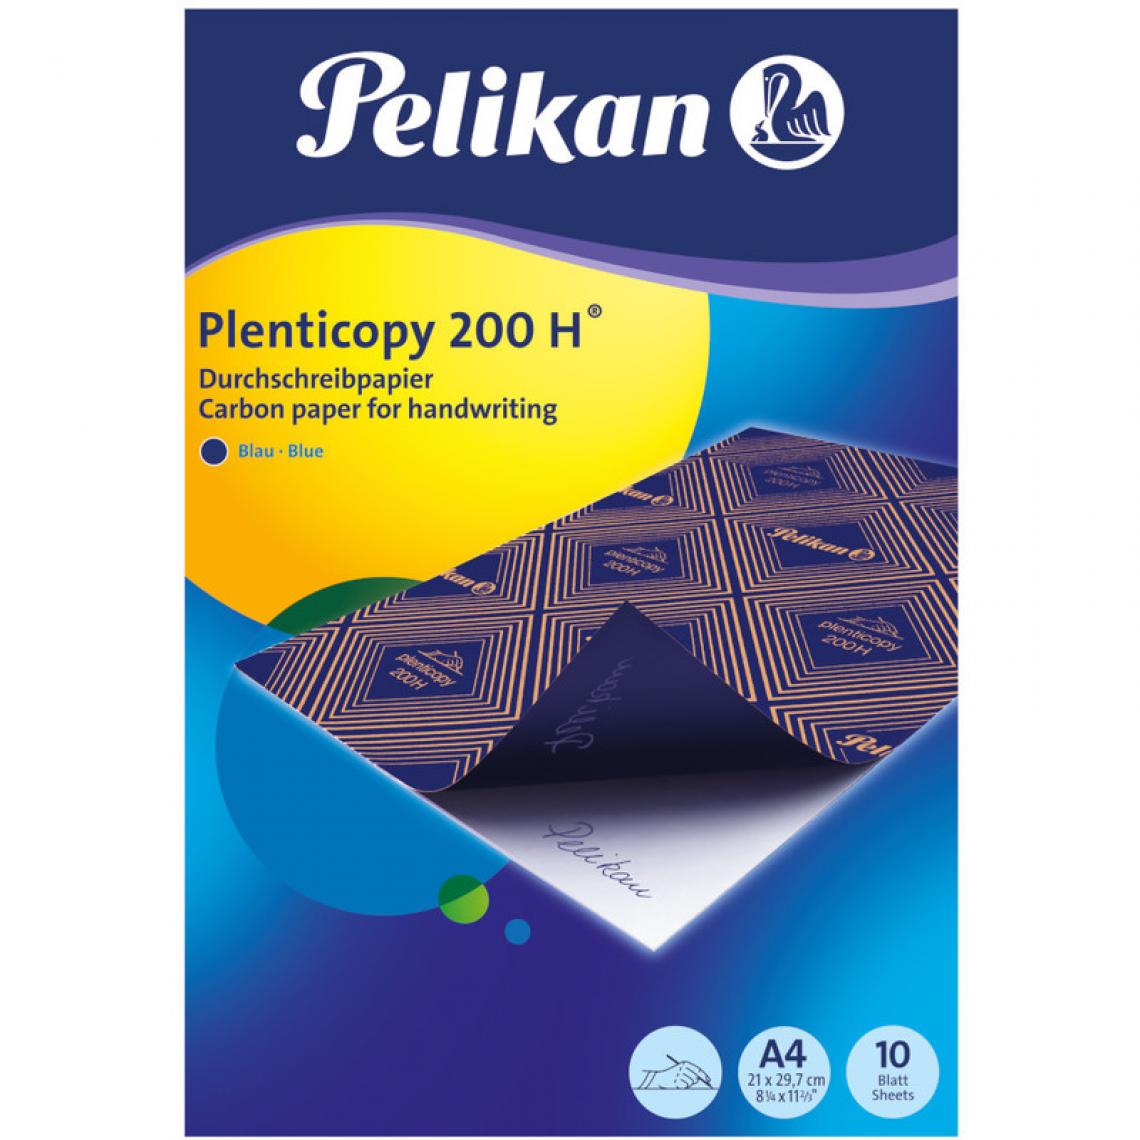 Pelikan - Pelikan Papier carbone plenticopy 200, 10 feuilles () - Accessoires Bureau